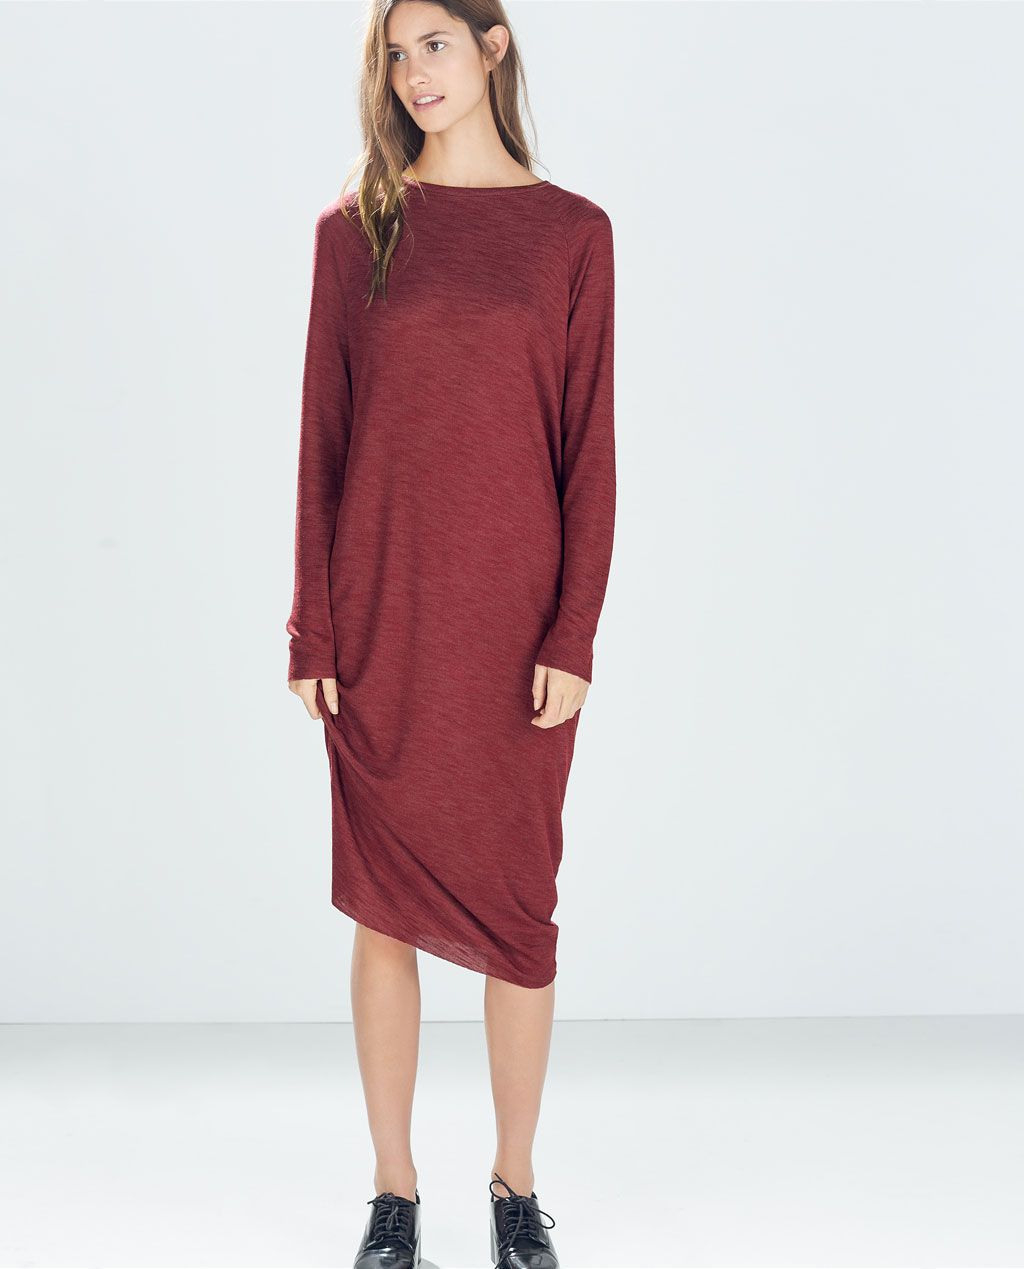 Zara  New This Week  Oversize Ribbed Dress  Kleider